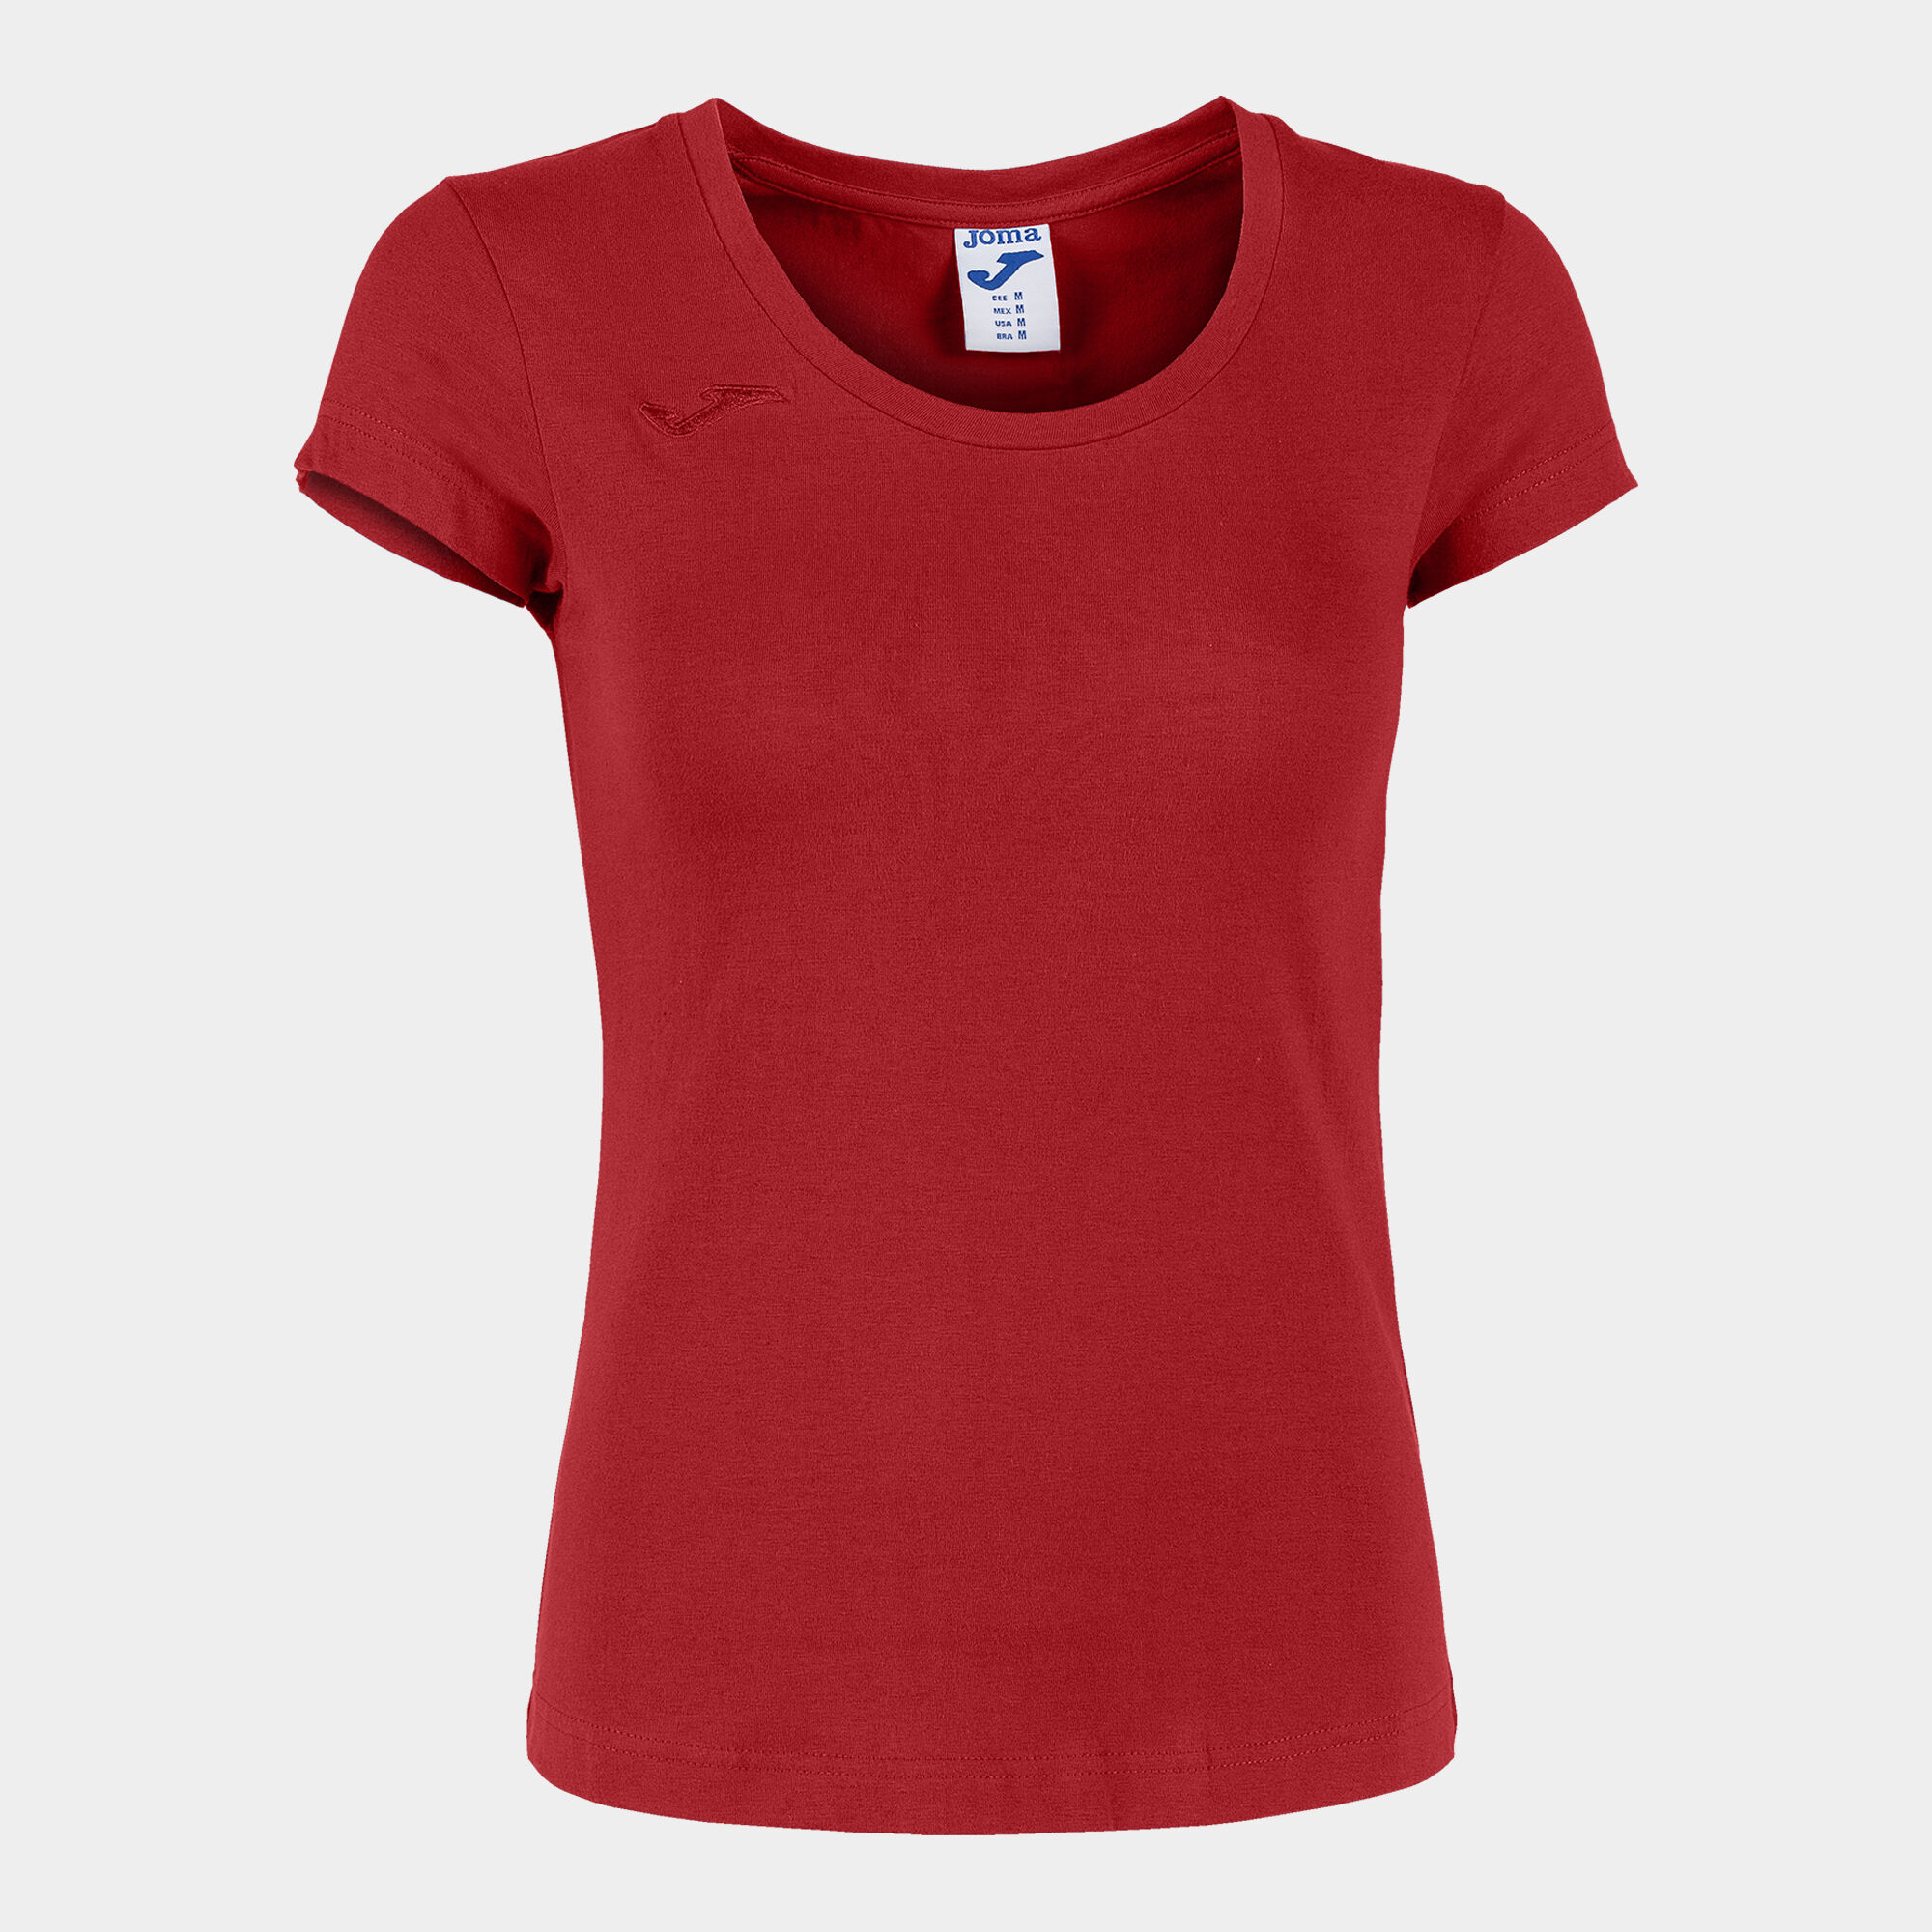 Camiseta manga corta mujer Verona rojo